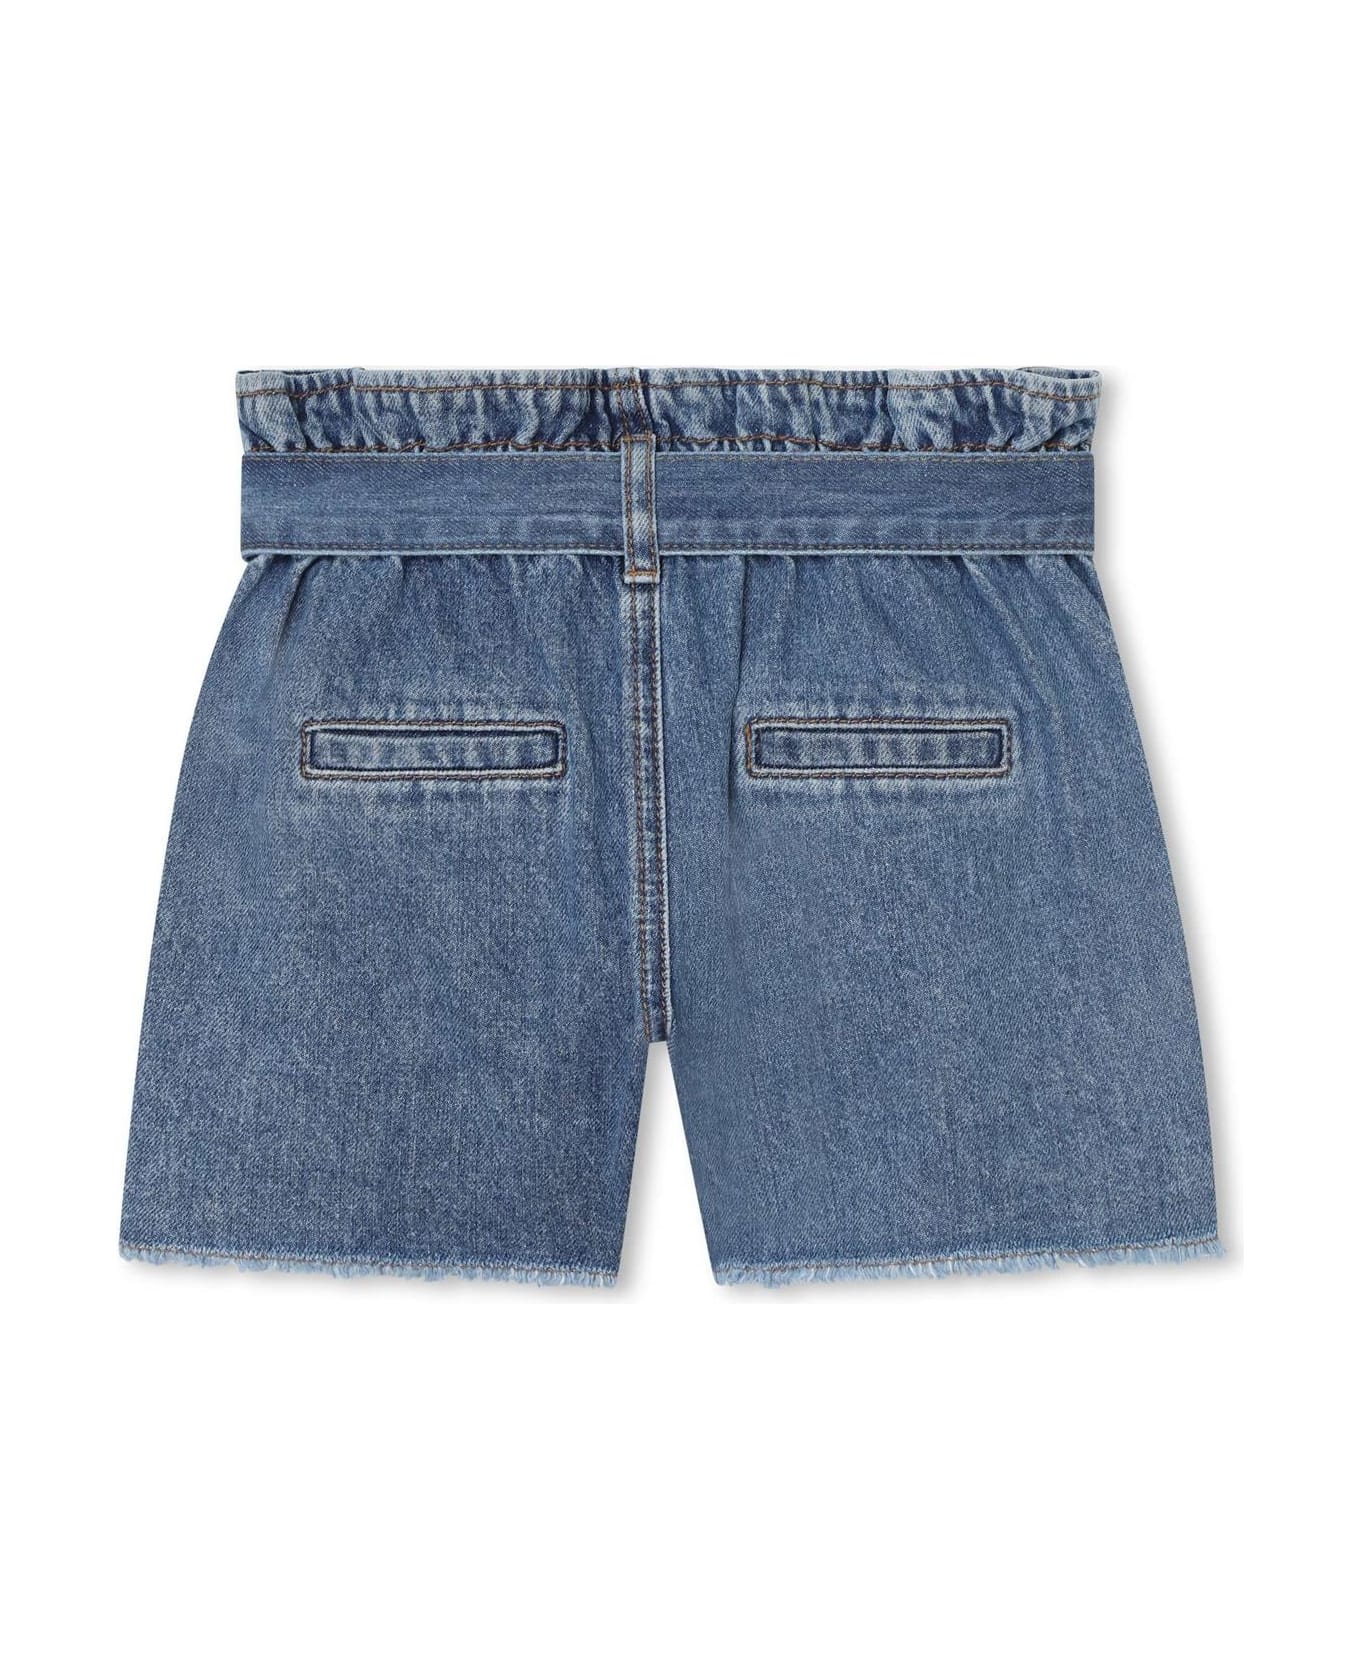 Sonia Rykiel Denim Shorts With Embroidery - Light blue ボトムス